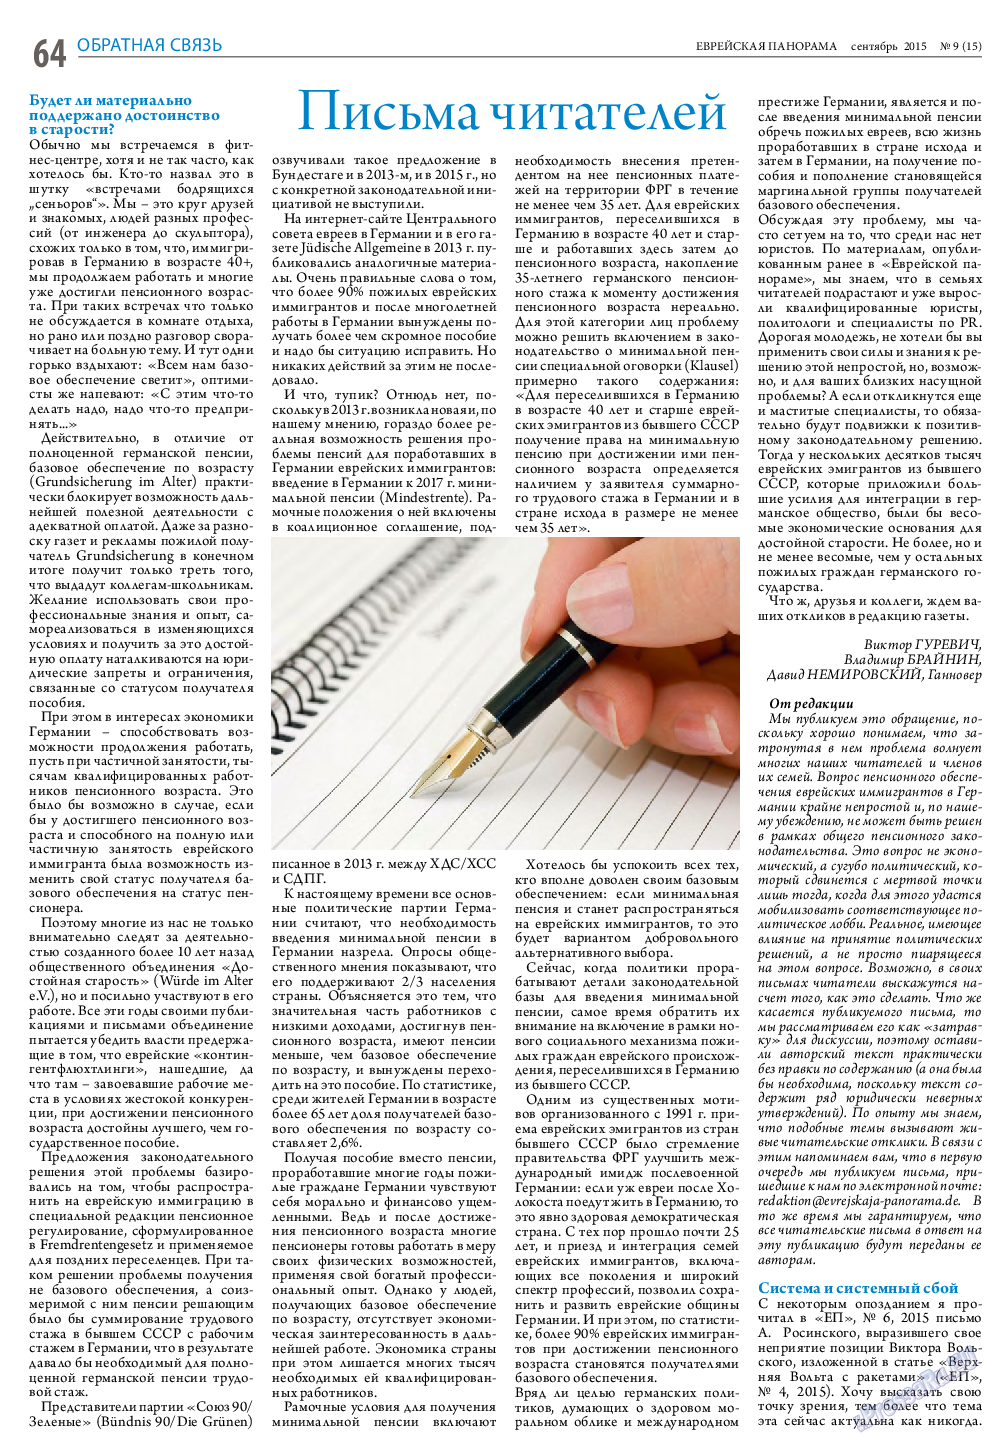 Еврейская панорама, газета. 2015 №9 стр.64